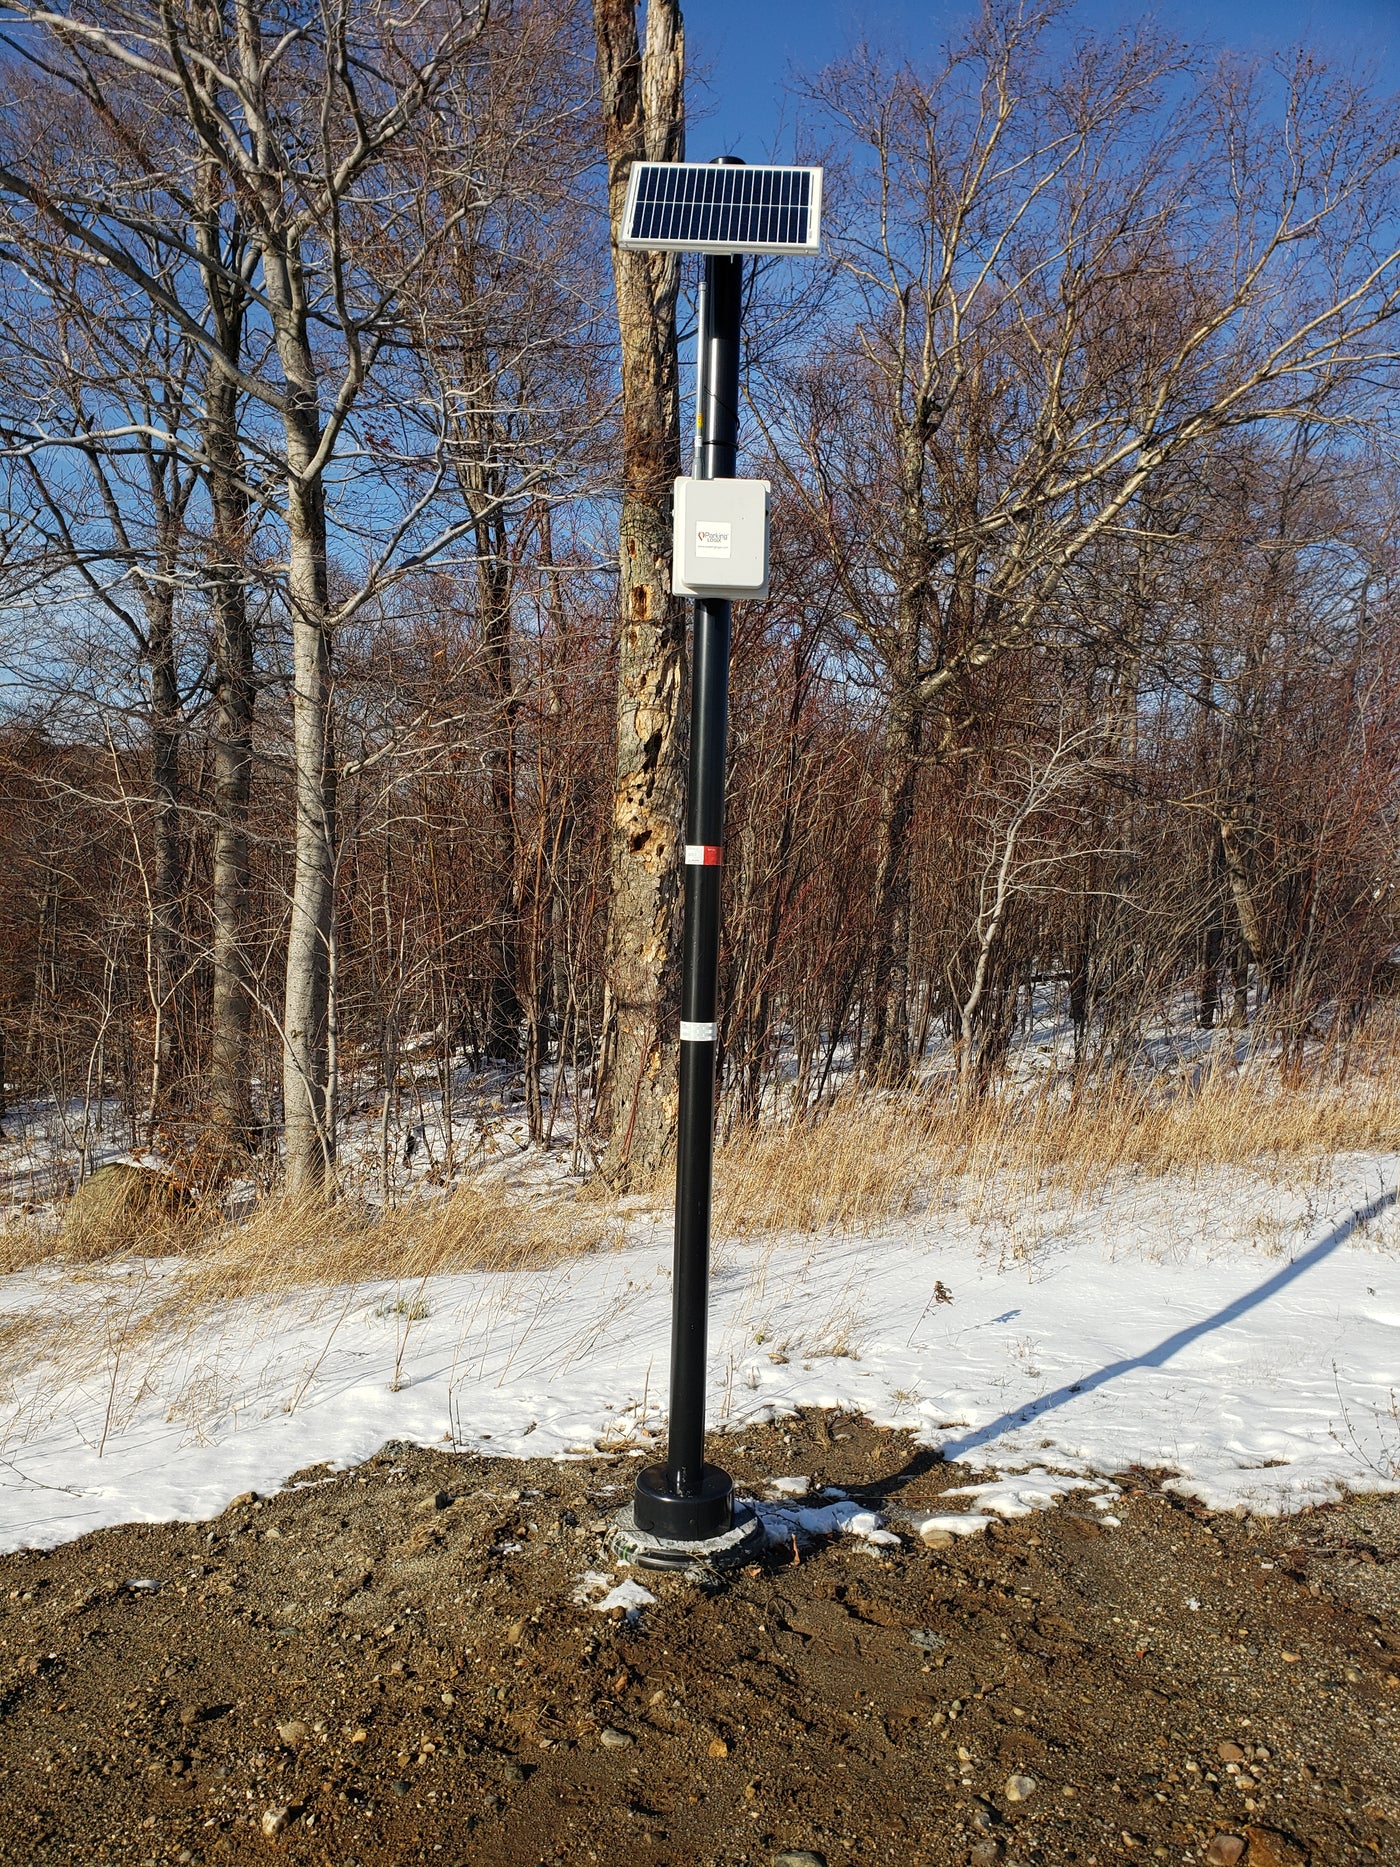 Solar Panel Light Poles for Killington Ski Resort in Vermont